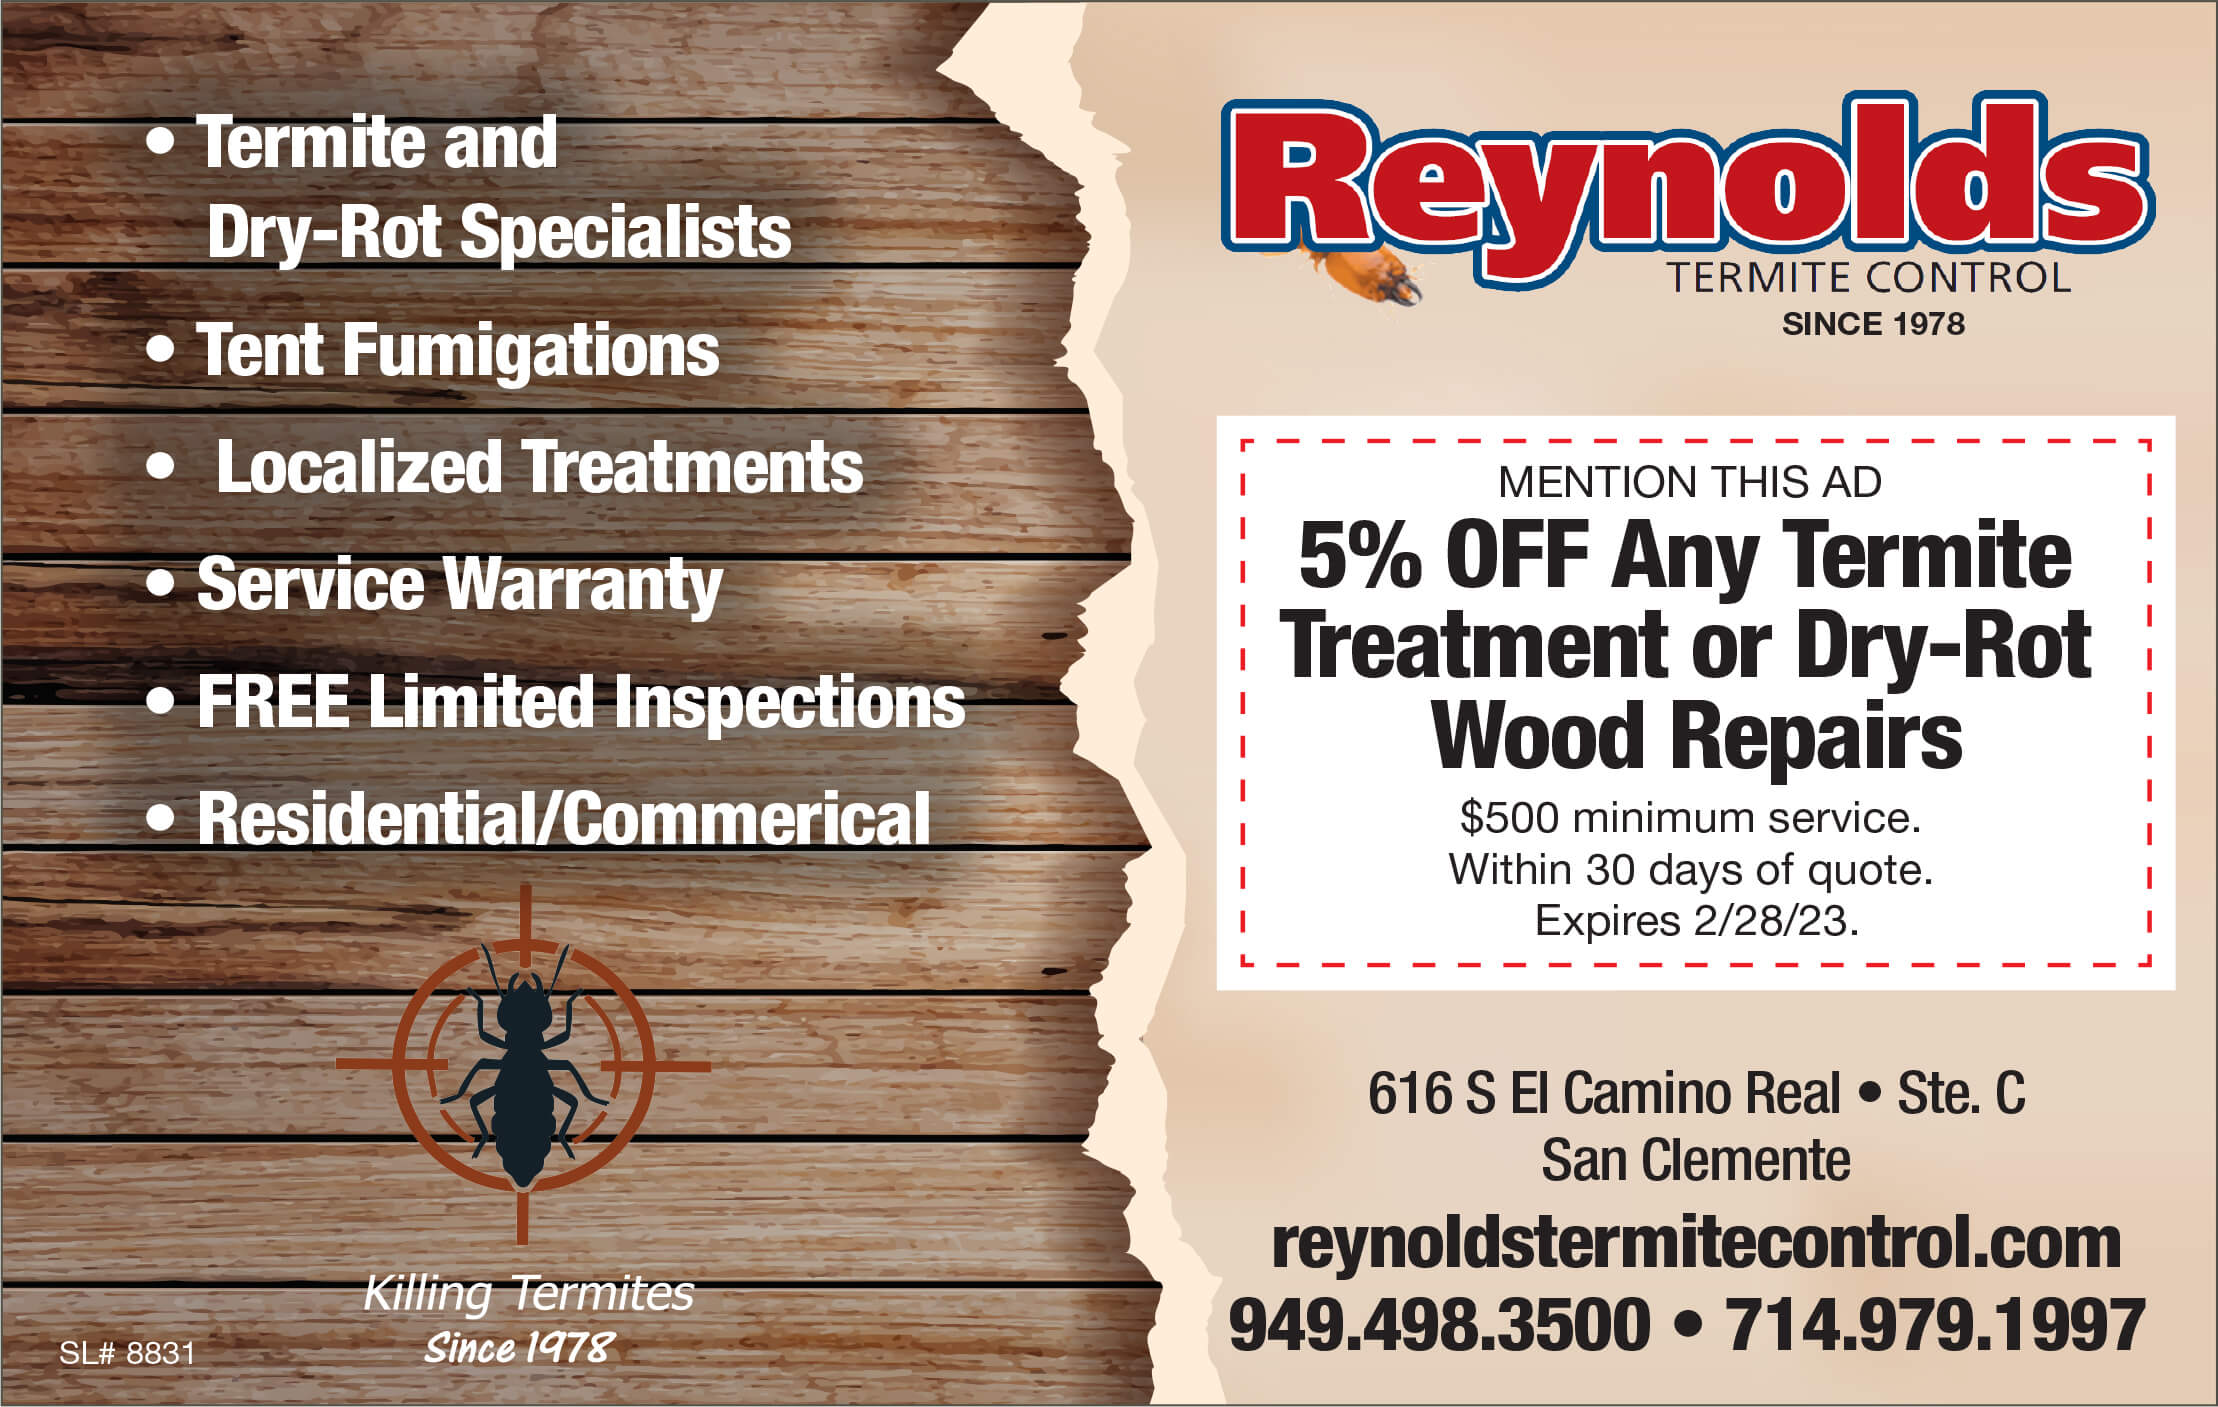 Reynold's Termite Control